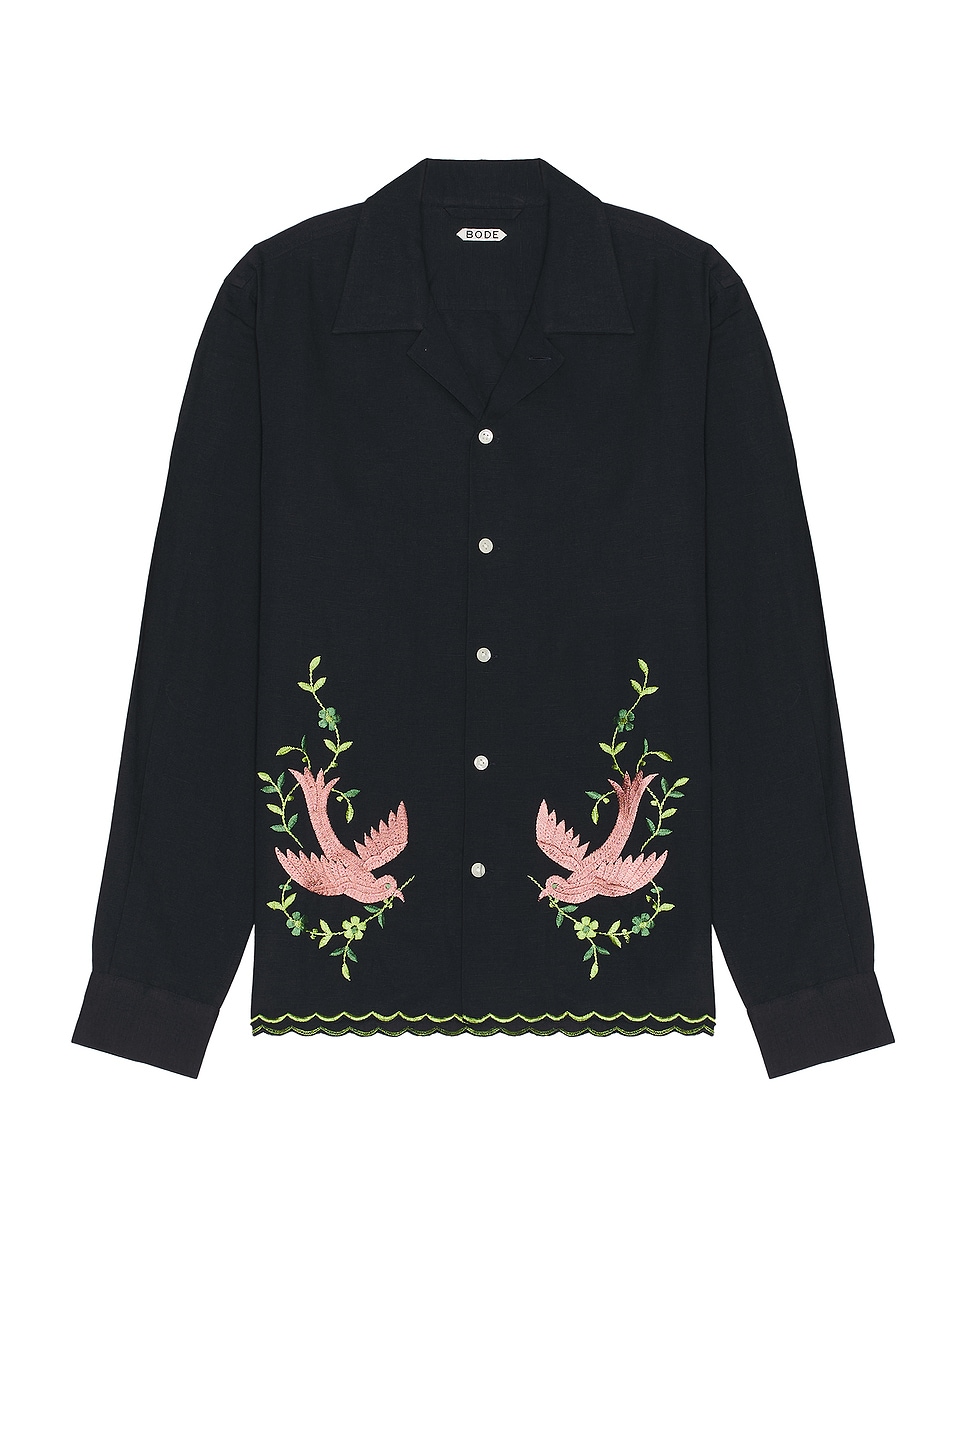 Rosefinch Long Sleeve Shirt in Black